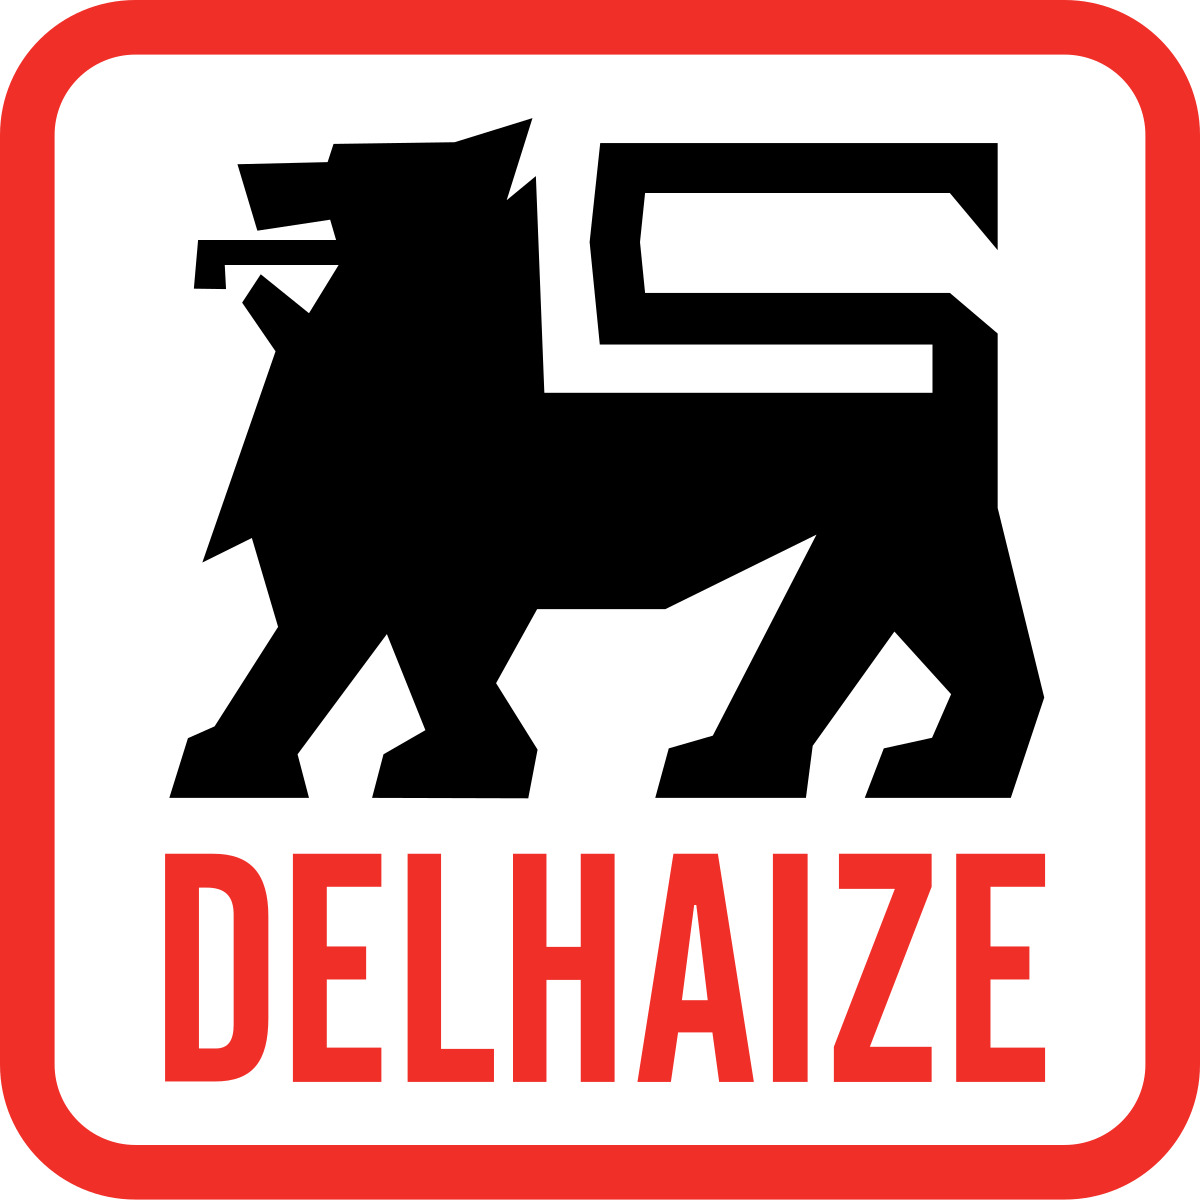 Delhaize Logo icons